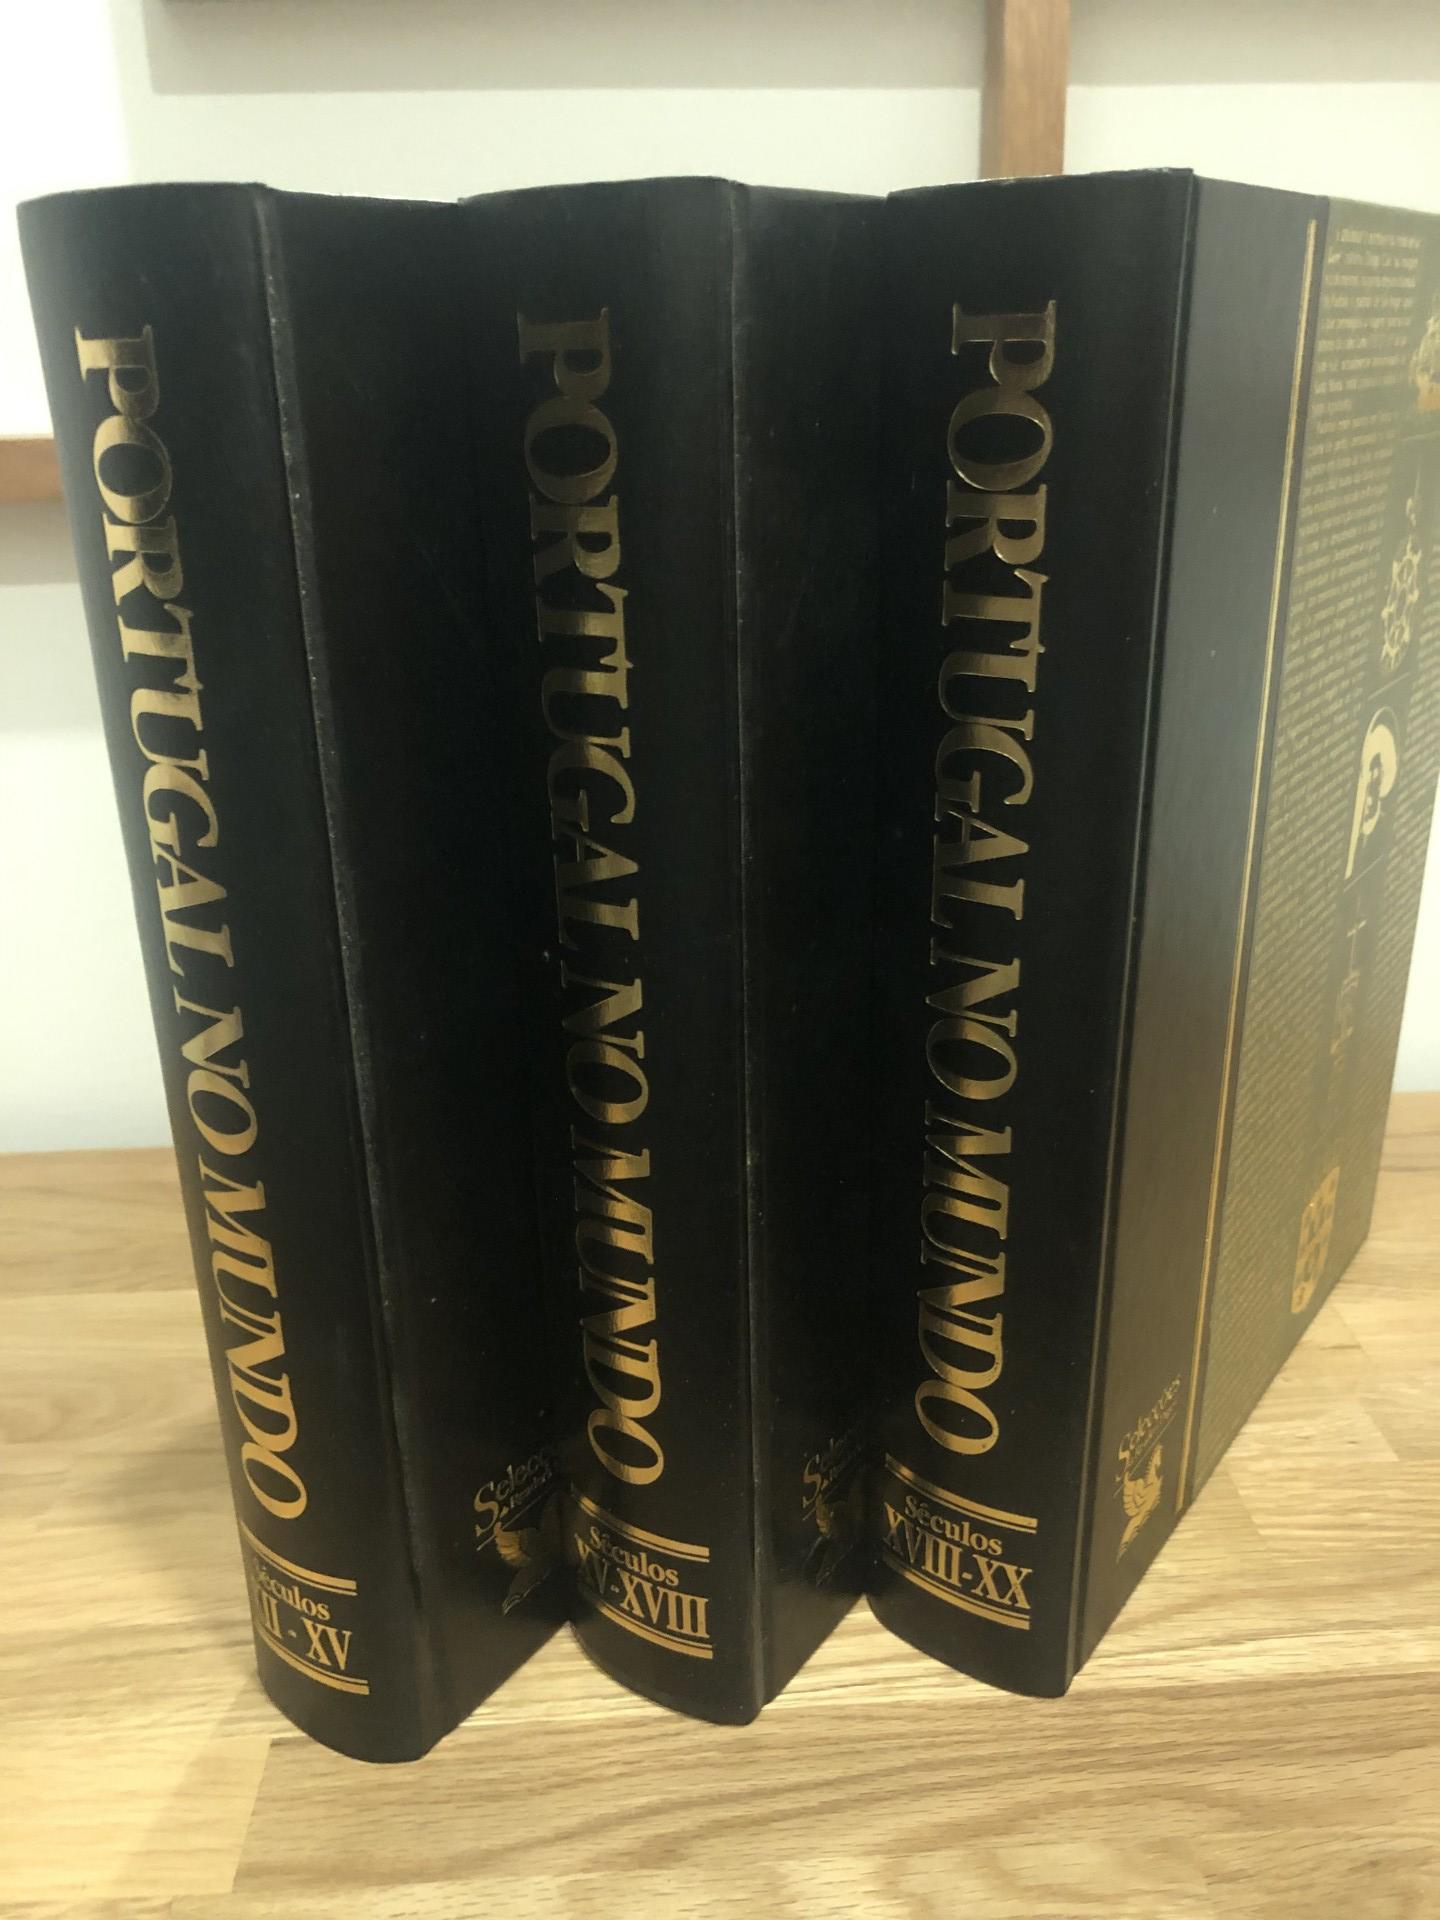 Portugal no Mundo (3 volumes)